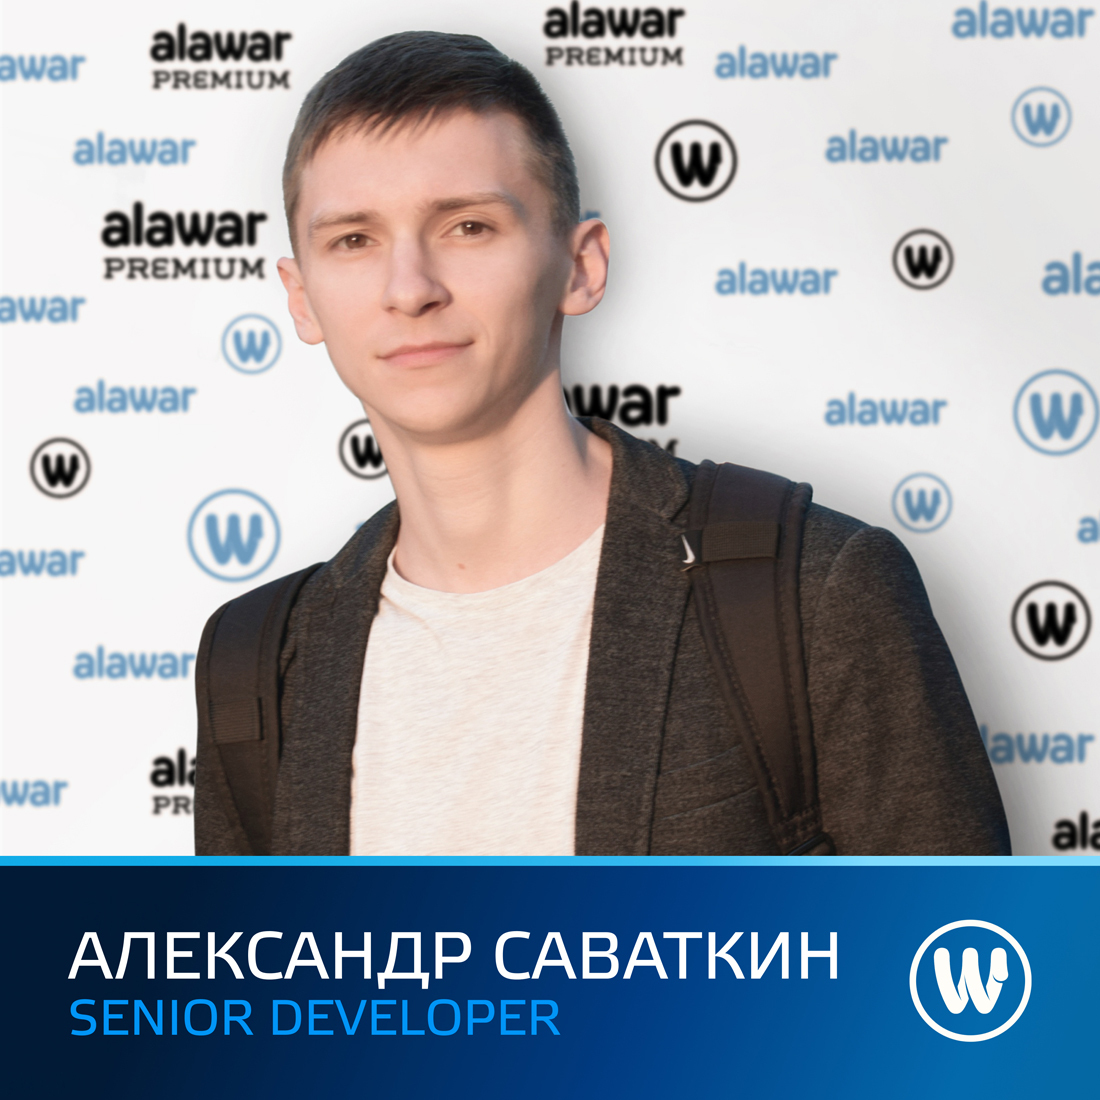 Аватарка эксперта Александр Саваткин